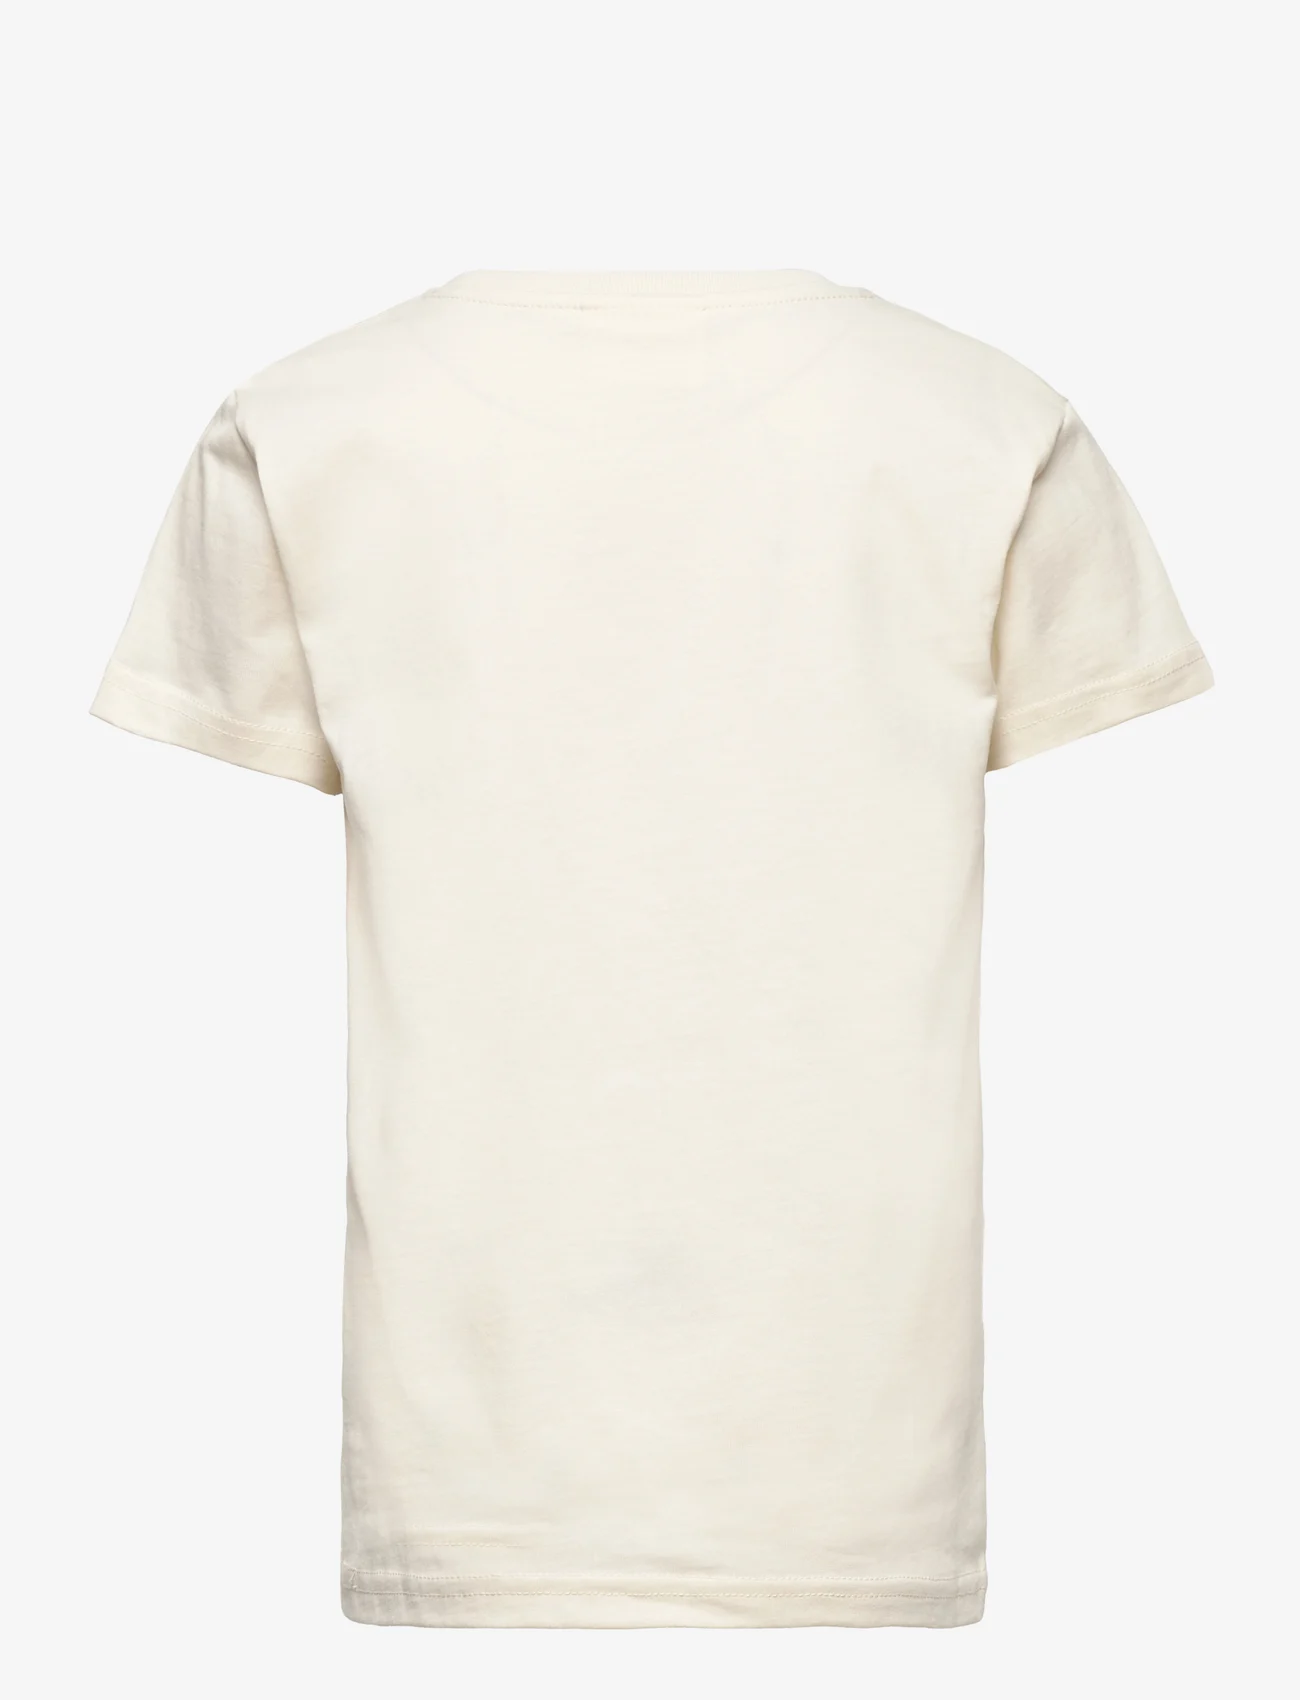 Sofie Schnoor Baby and Kids - T-shirt - lühikeste varrukatega t-särgid - antique white - 1